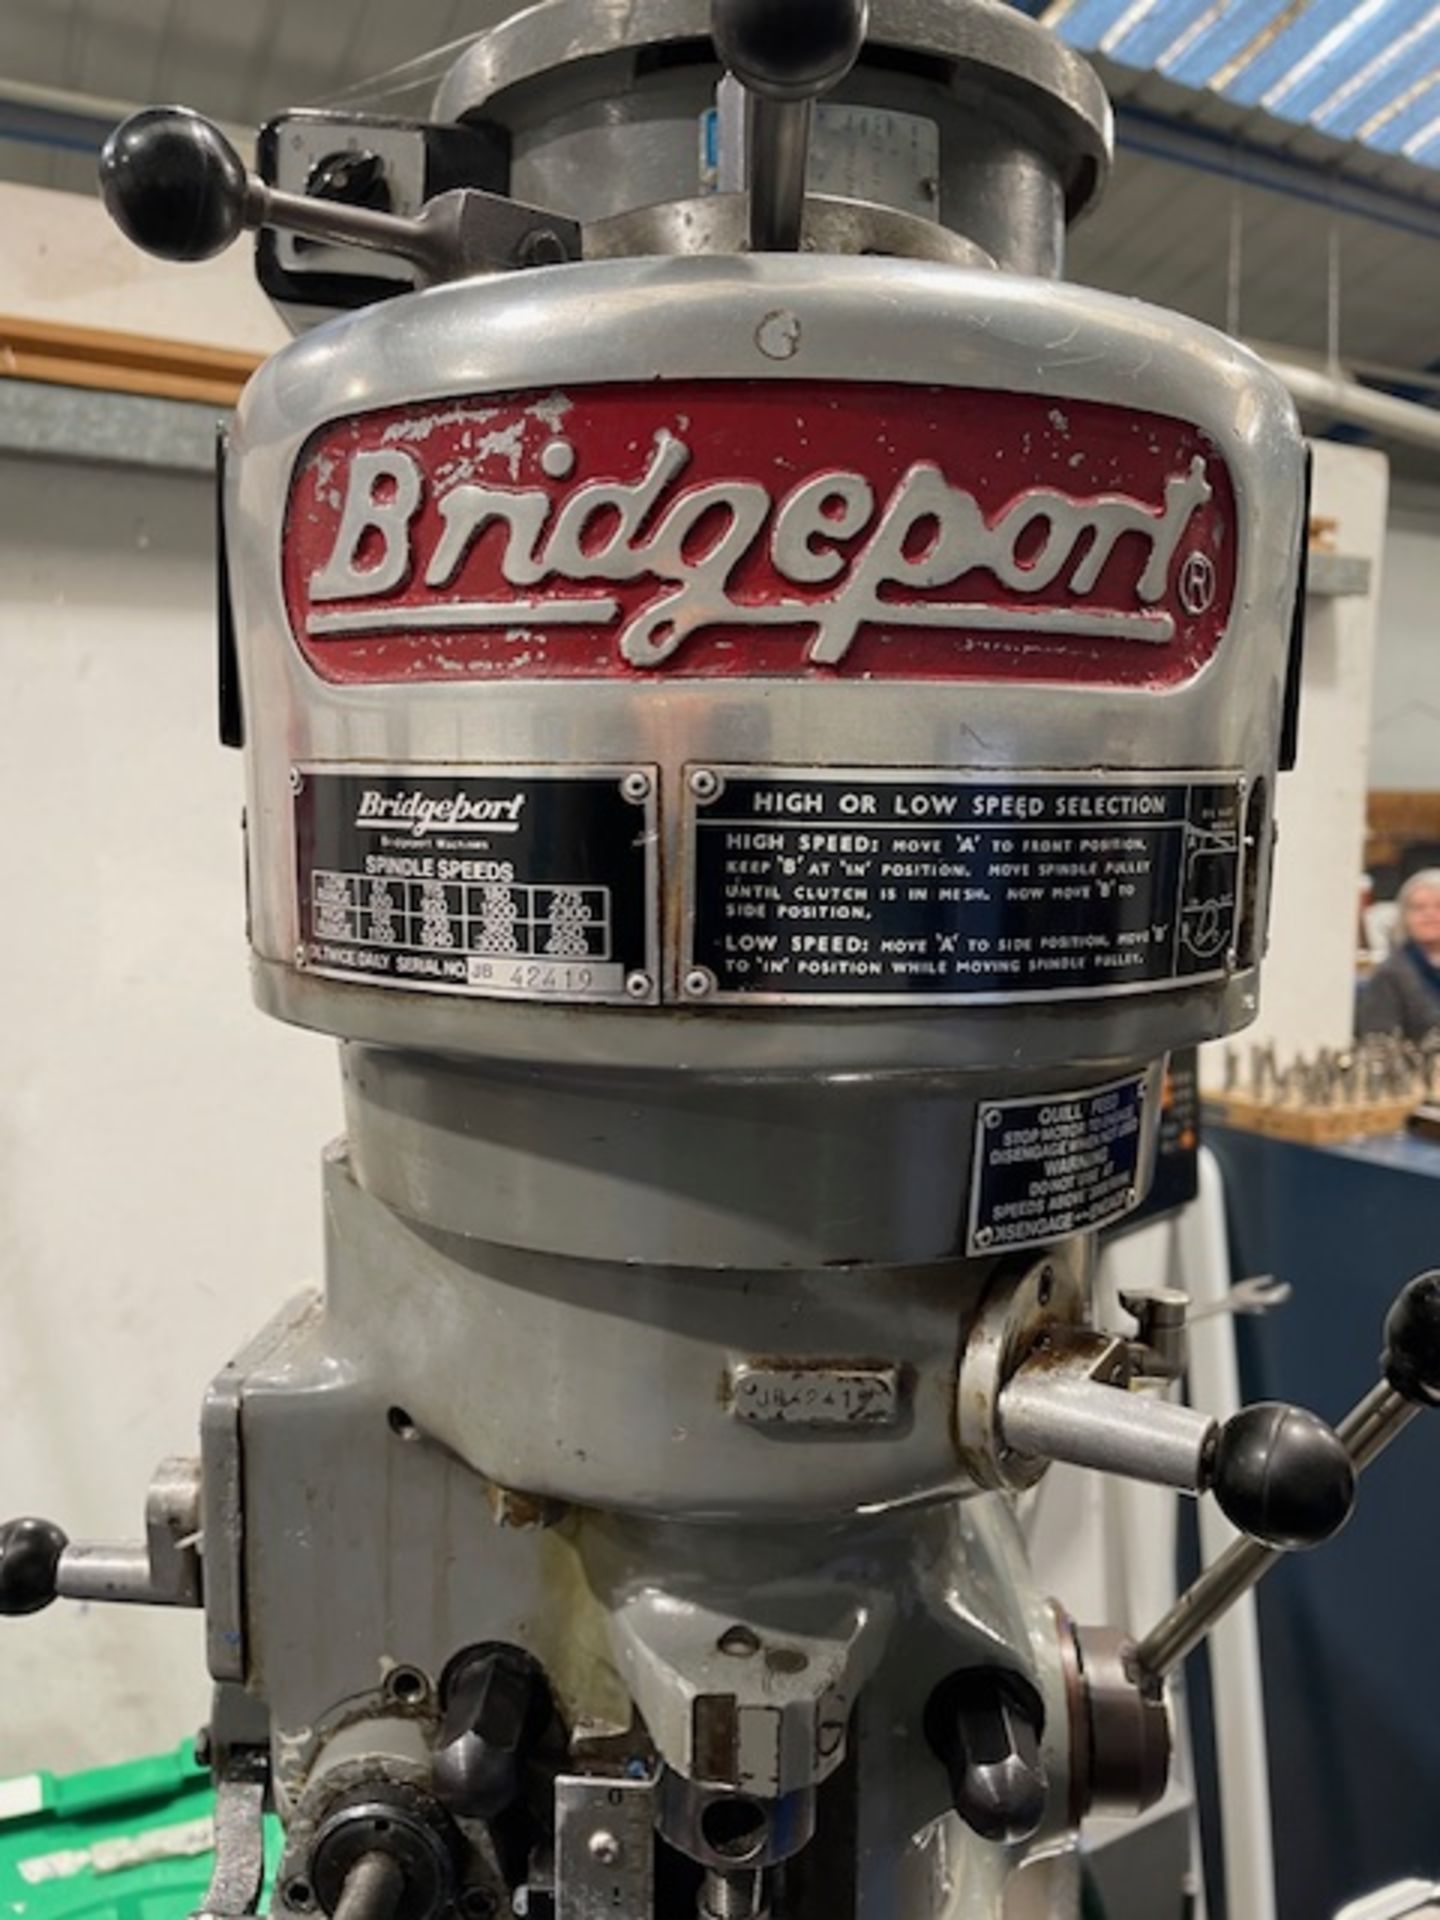 Bridgeport Series 1 JB Milling Machine, Serial Number JB 42419, Heidenhain Control & 6” Machine Vice - Image 3 of 3